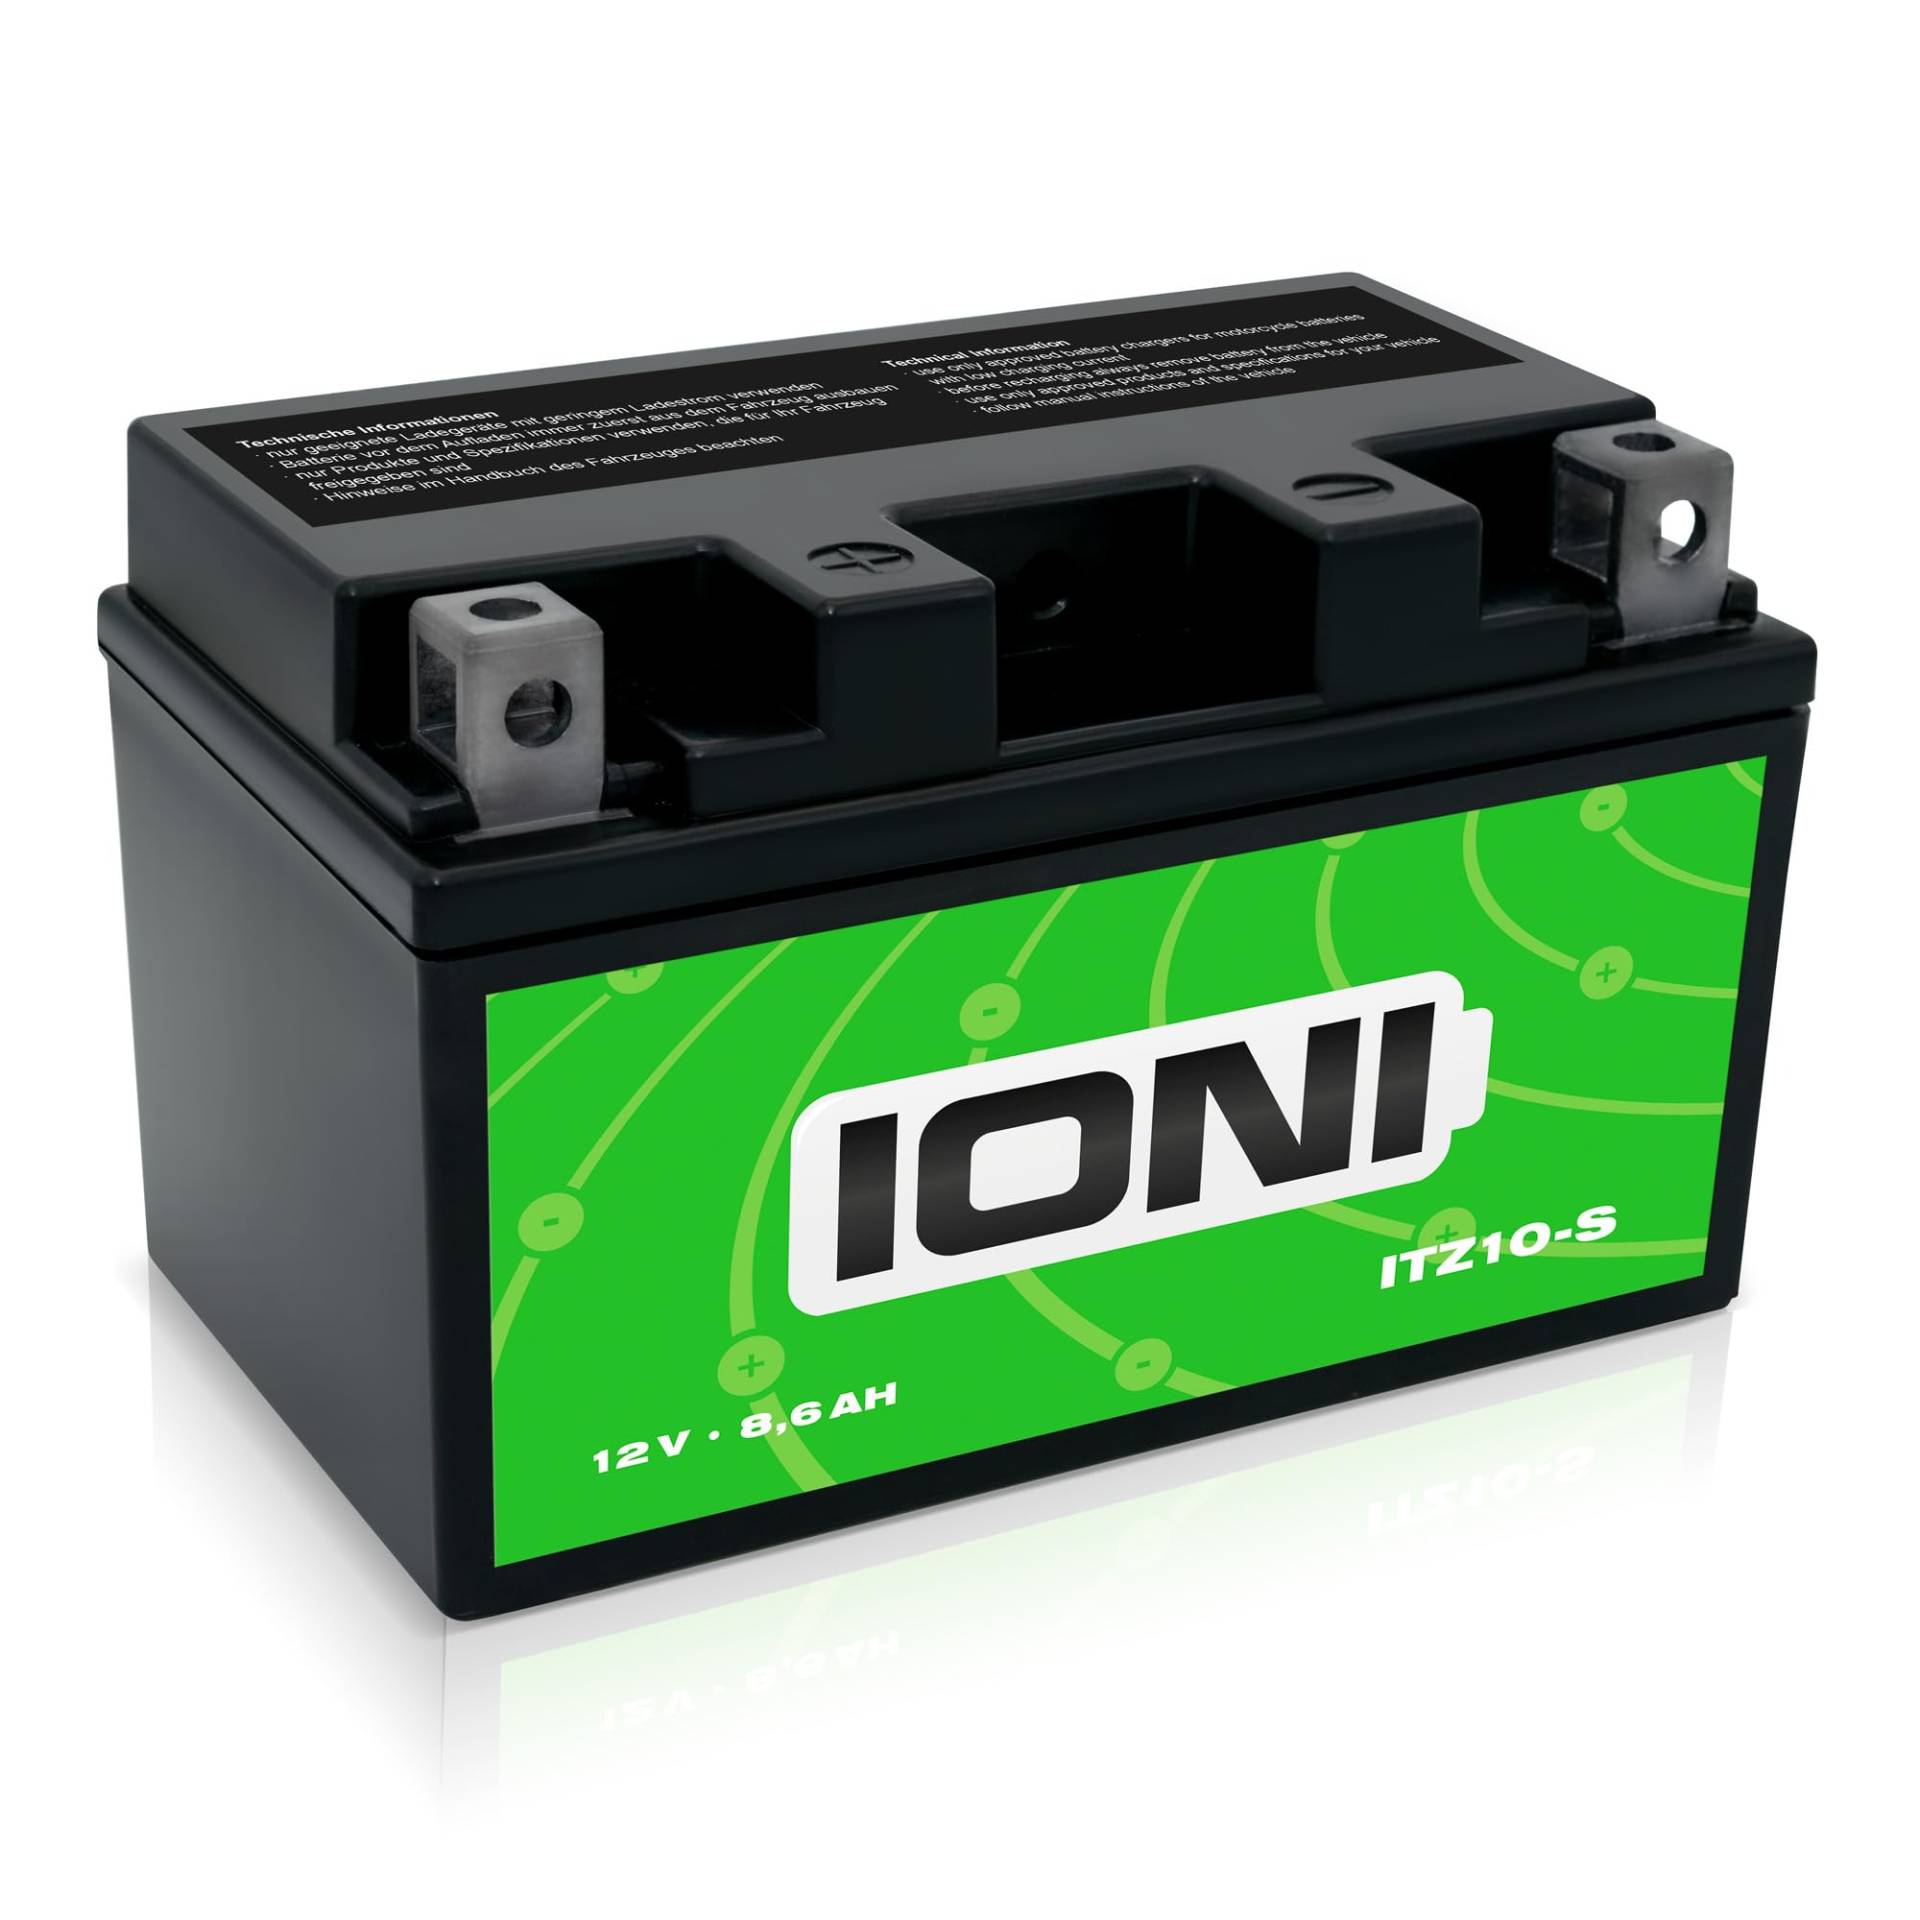 IONI ITZ10-S 12V 8,6Ah AGM Batterie kompatibel mit MG10ZS / YTZ10S versiegelt/wartungsfrei Motorradbatterie, 8,6Ah - kompatibel mit YTZ10S von IONI